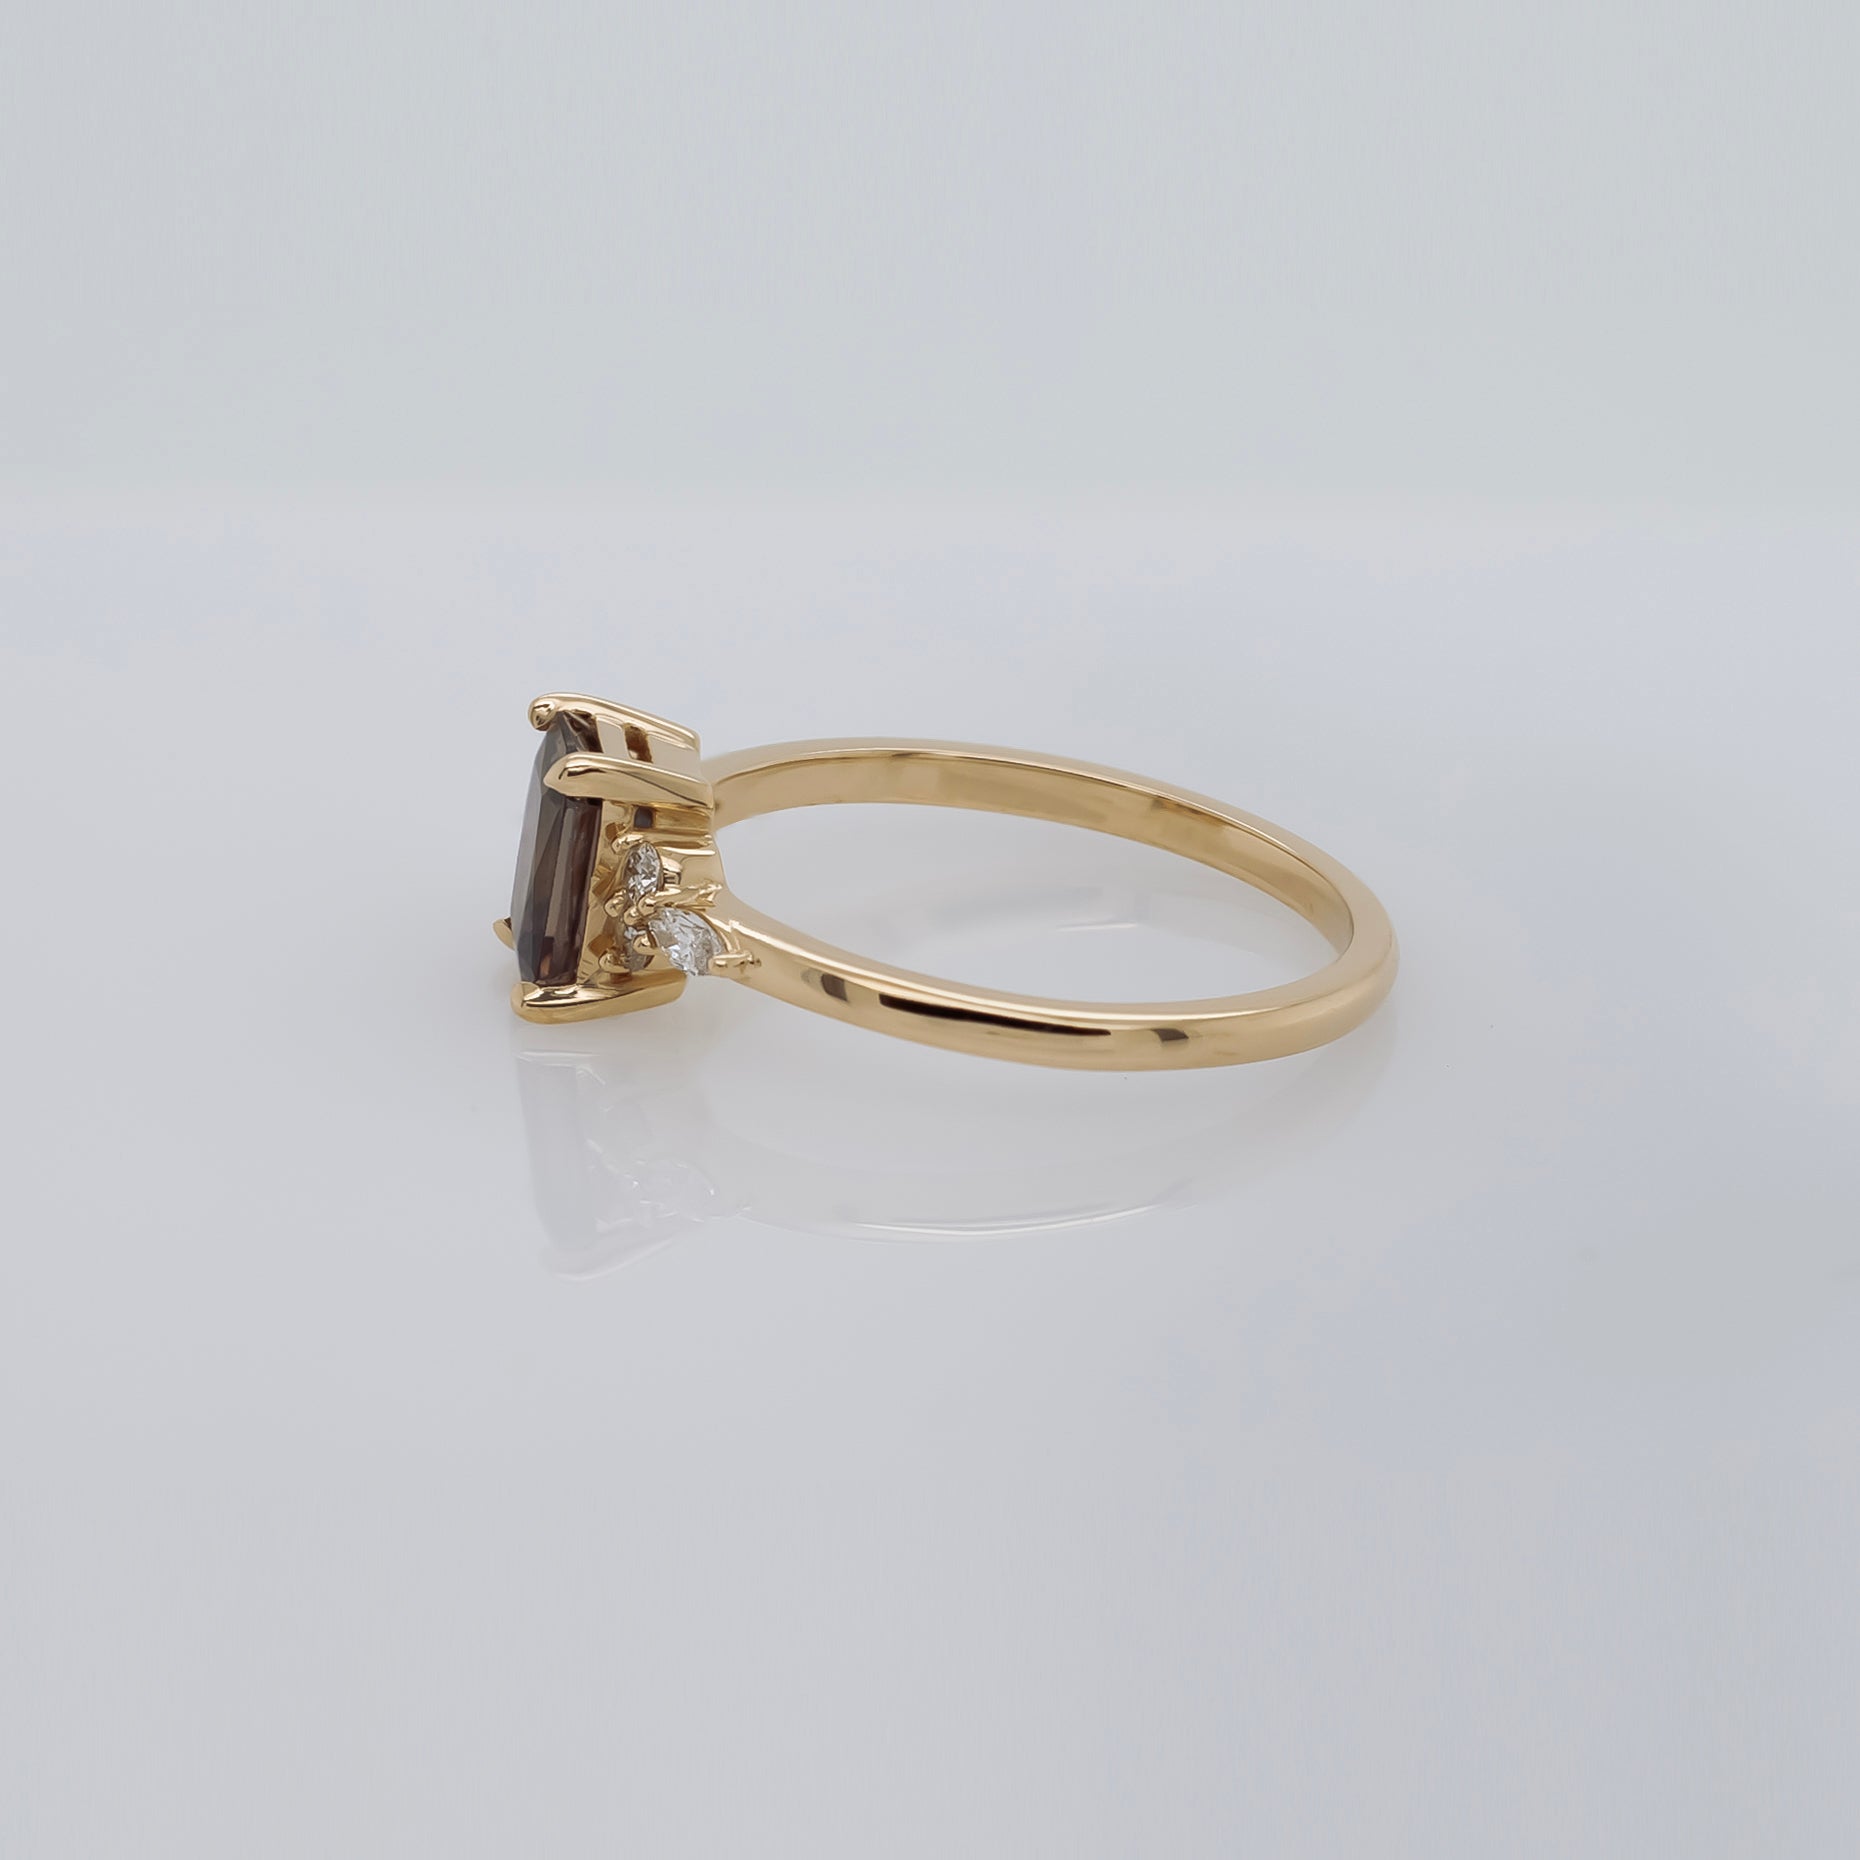 1.22ct Cognac Sapphire Engagement Ring